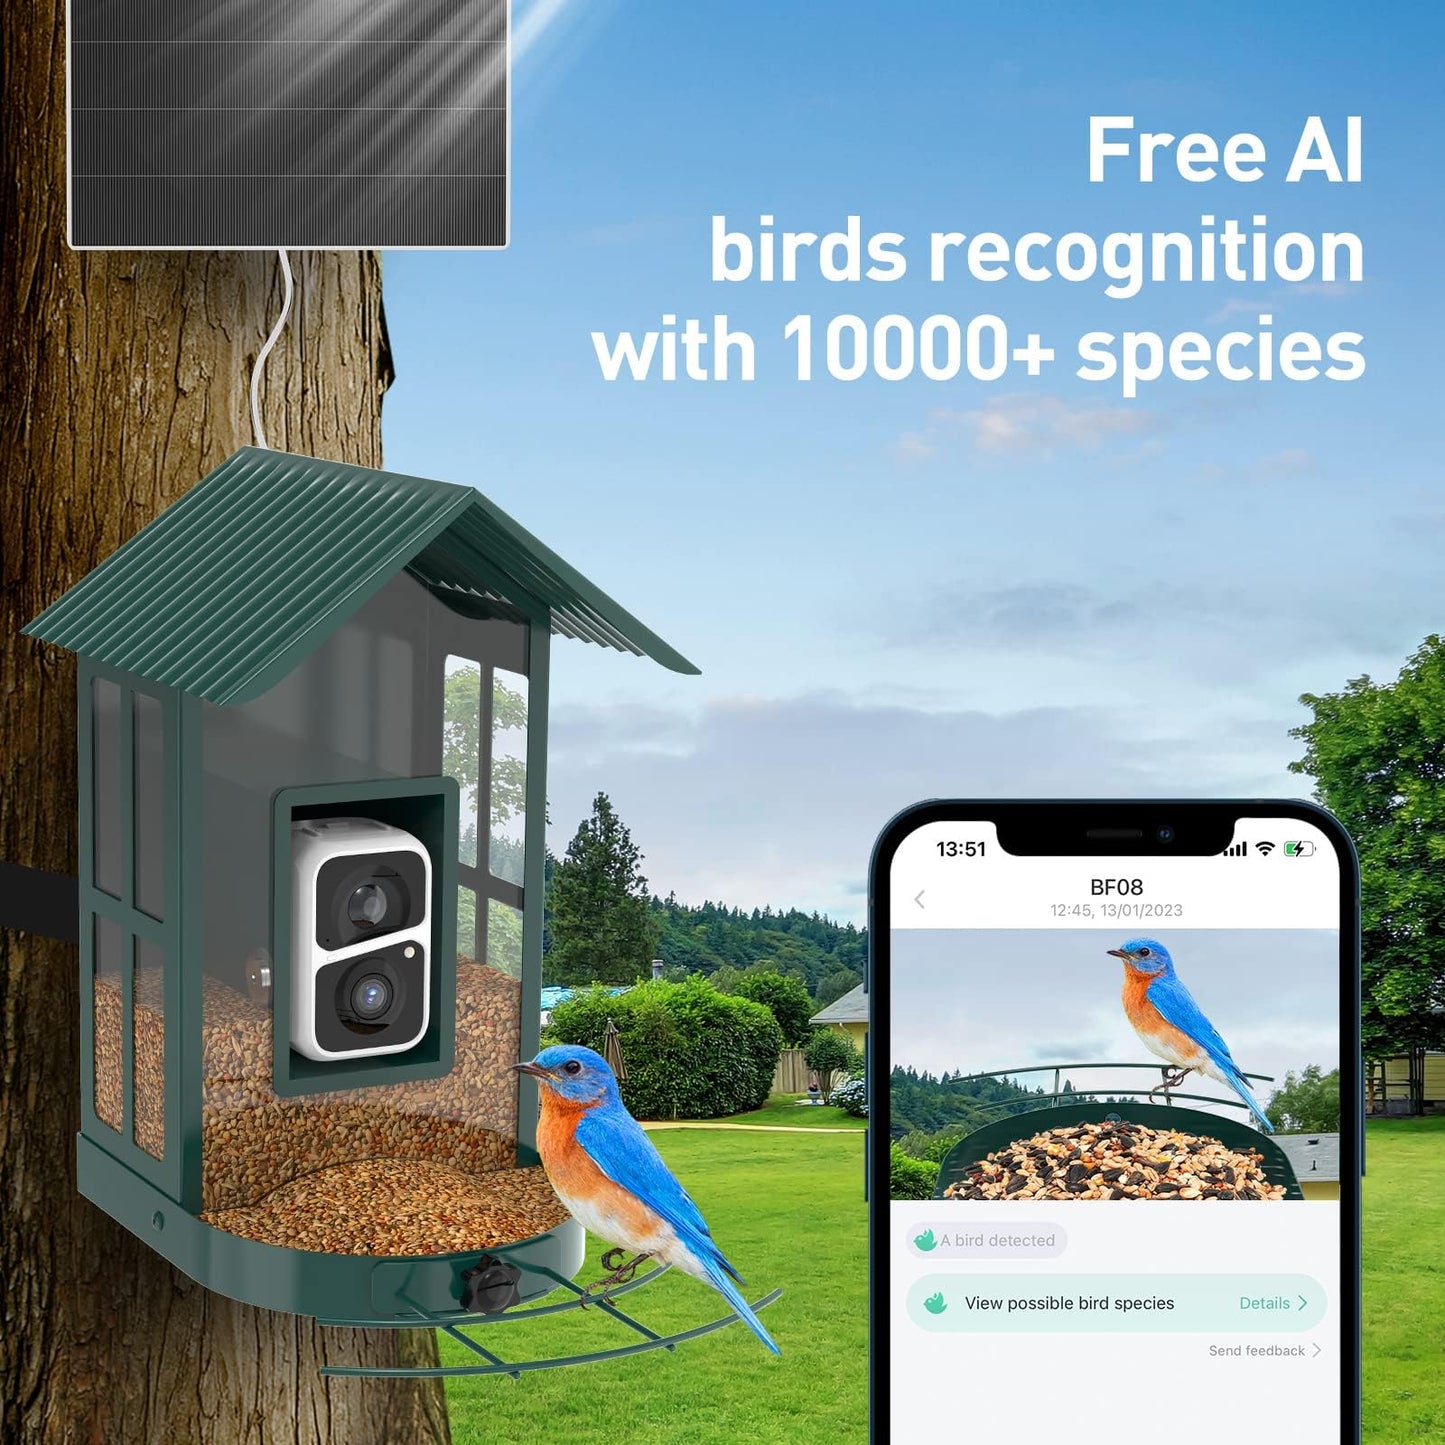 Bird Feeder with Camera Wireless Outdoor with AI Identify Bird Species, Smart Wild Bird Watching Cam, Live View, Motion Triggered Notification, 3W